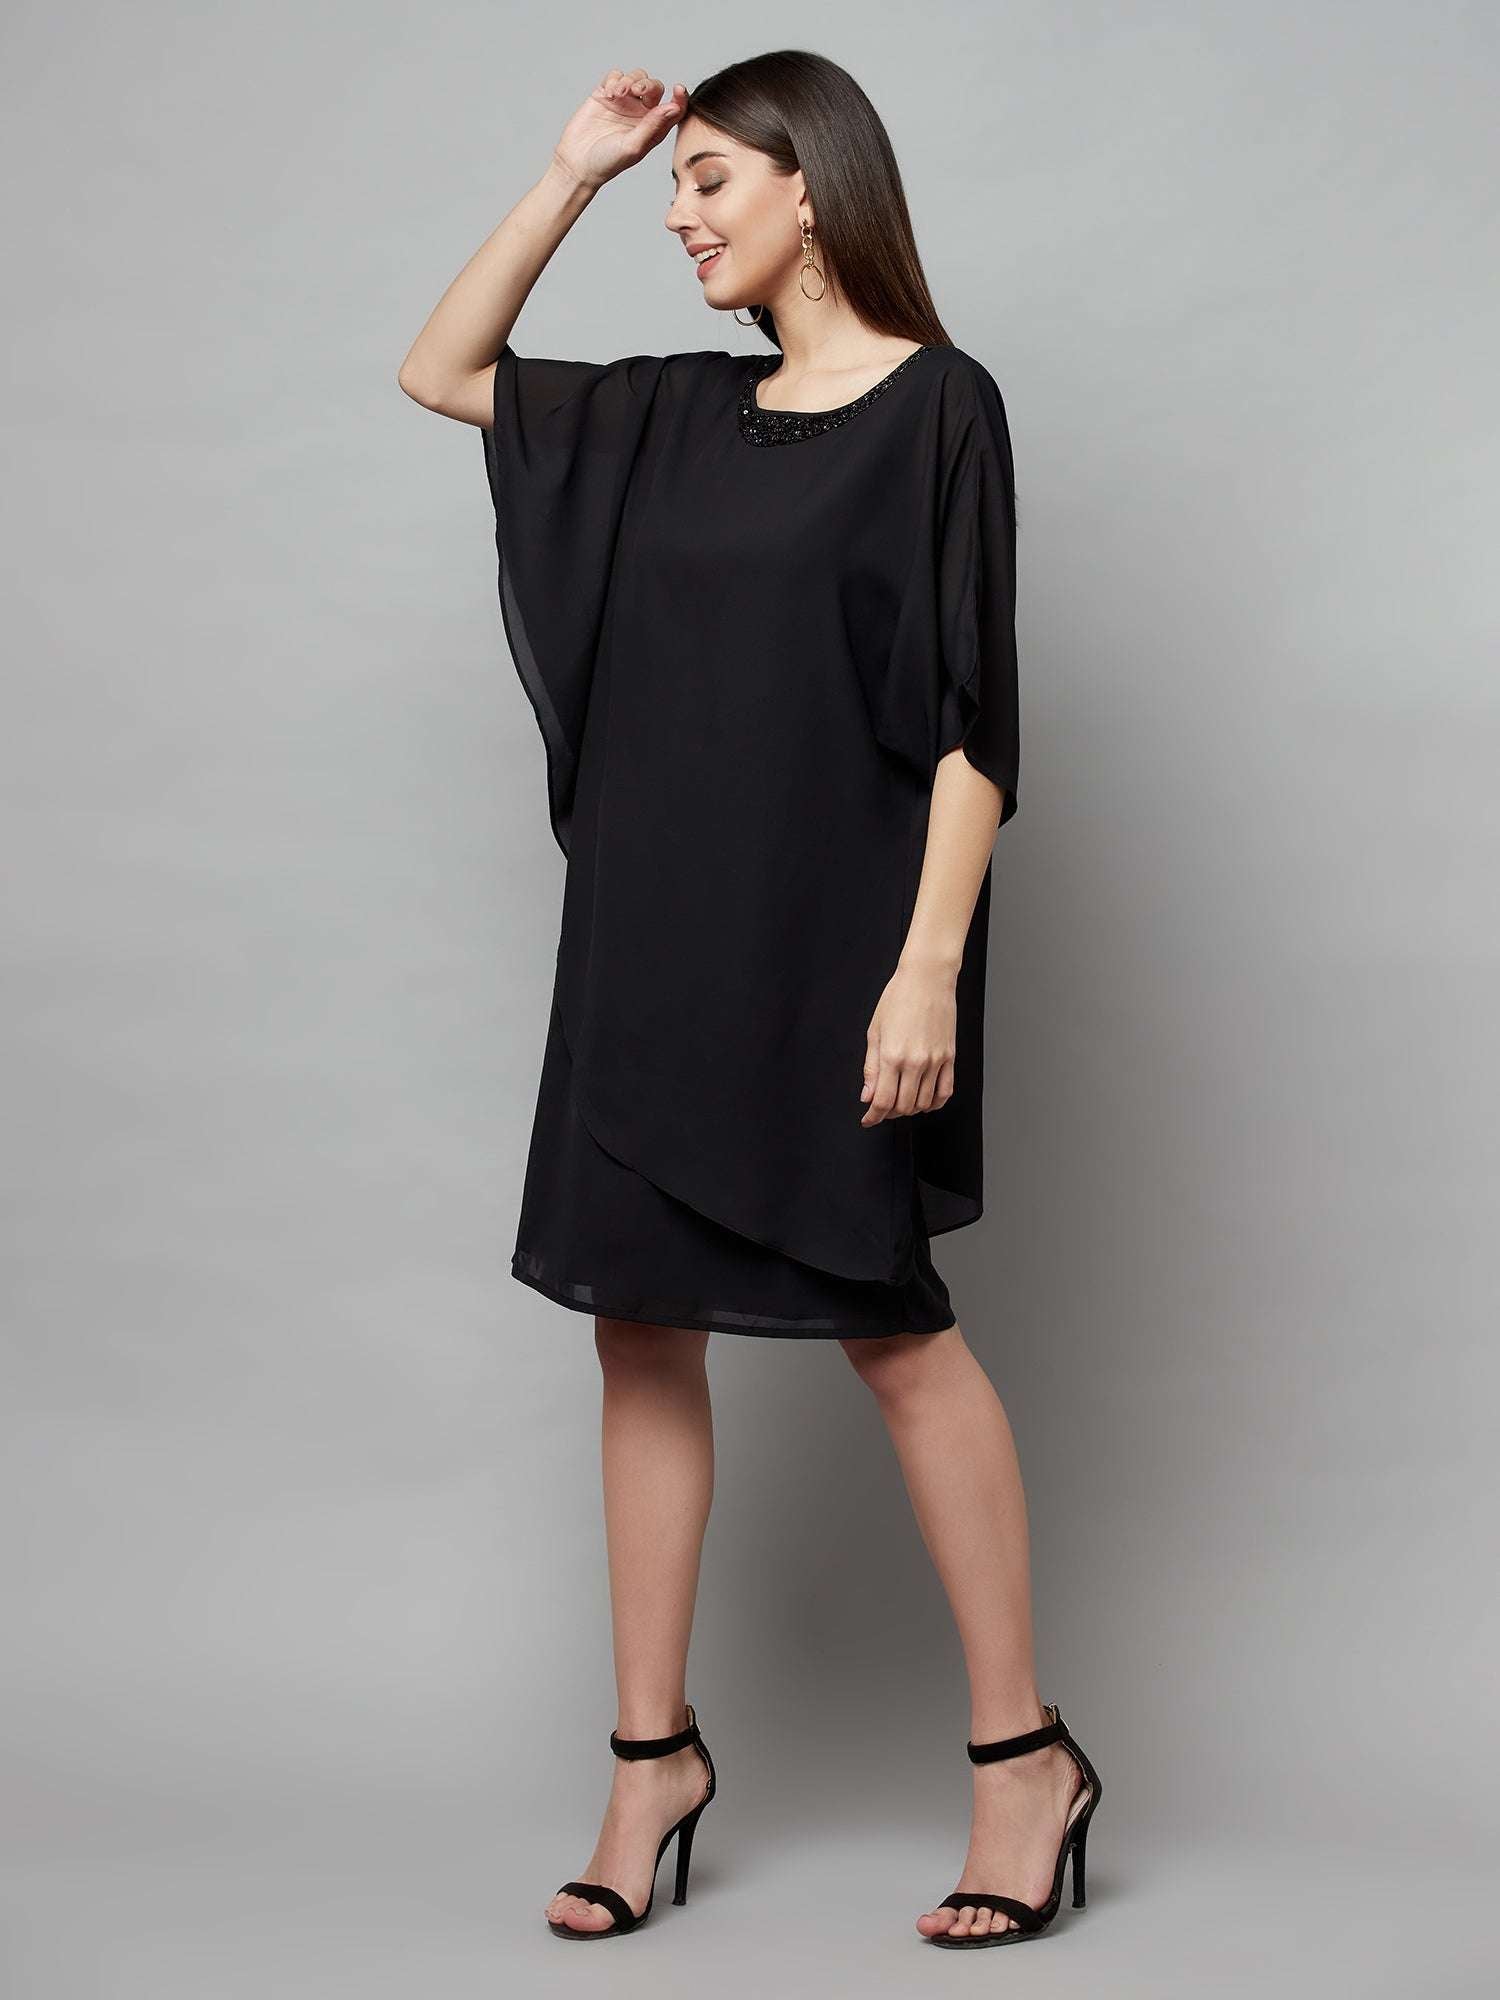 popover black dress with neck embellishment